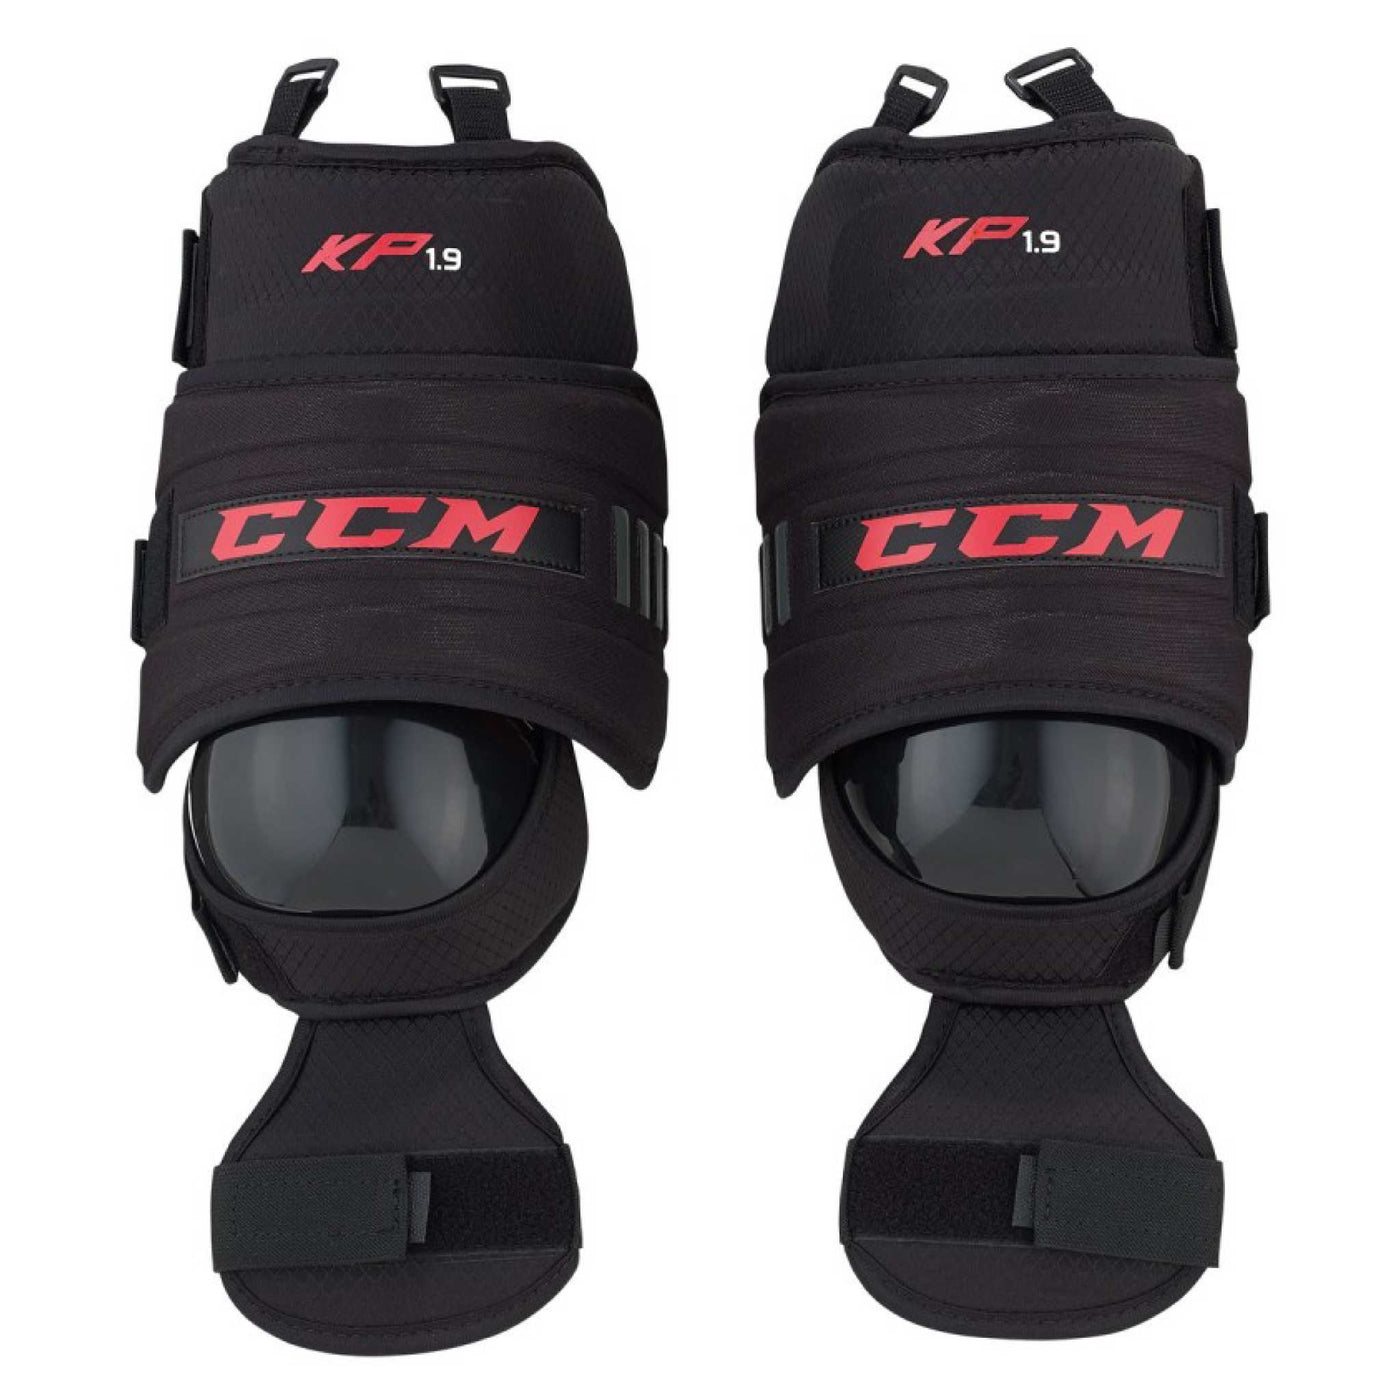 CCM 1.9 Goalie knee pads - INT